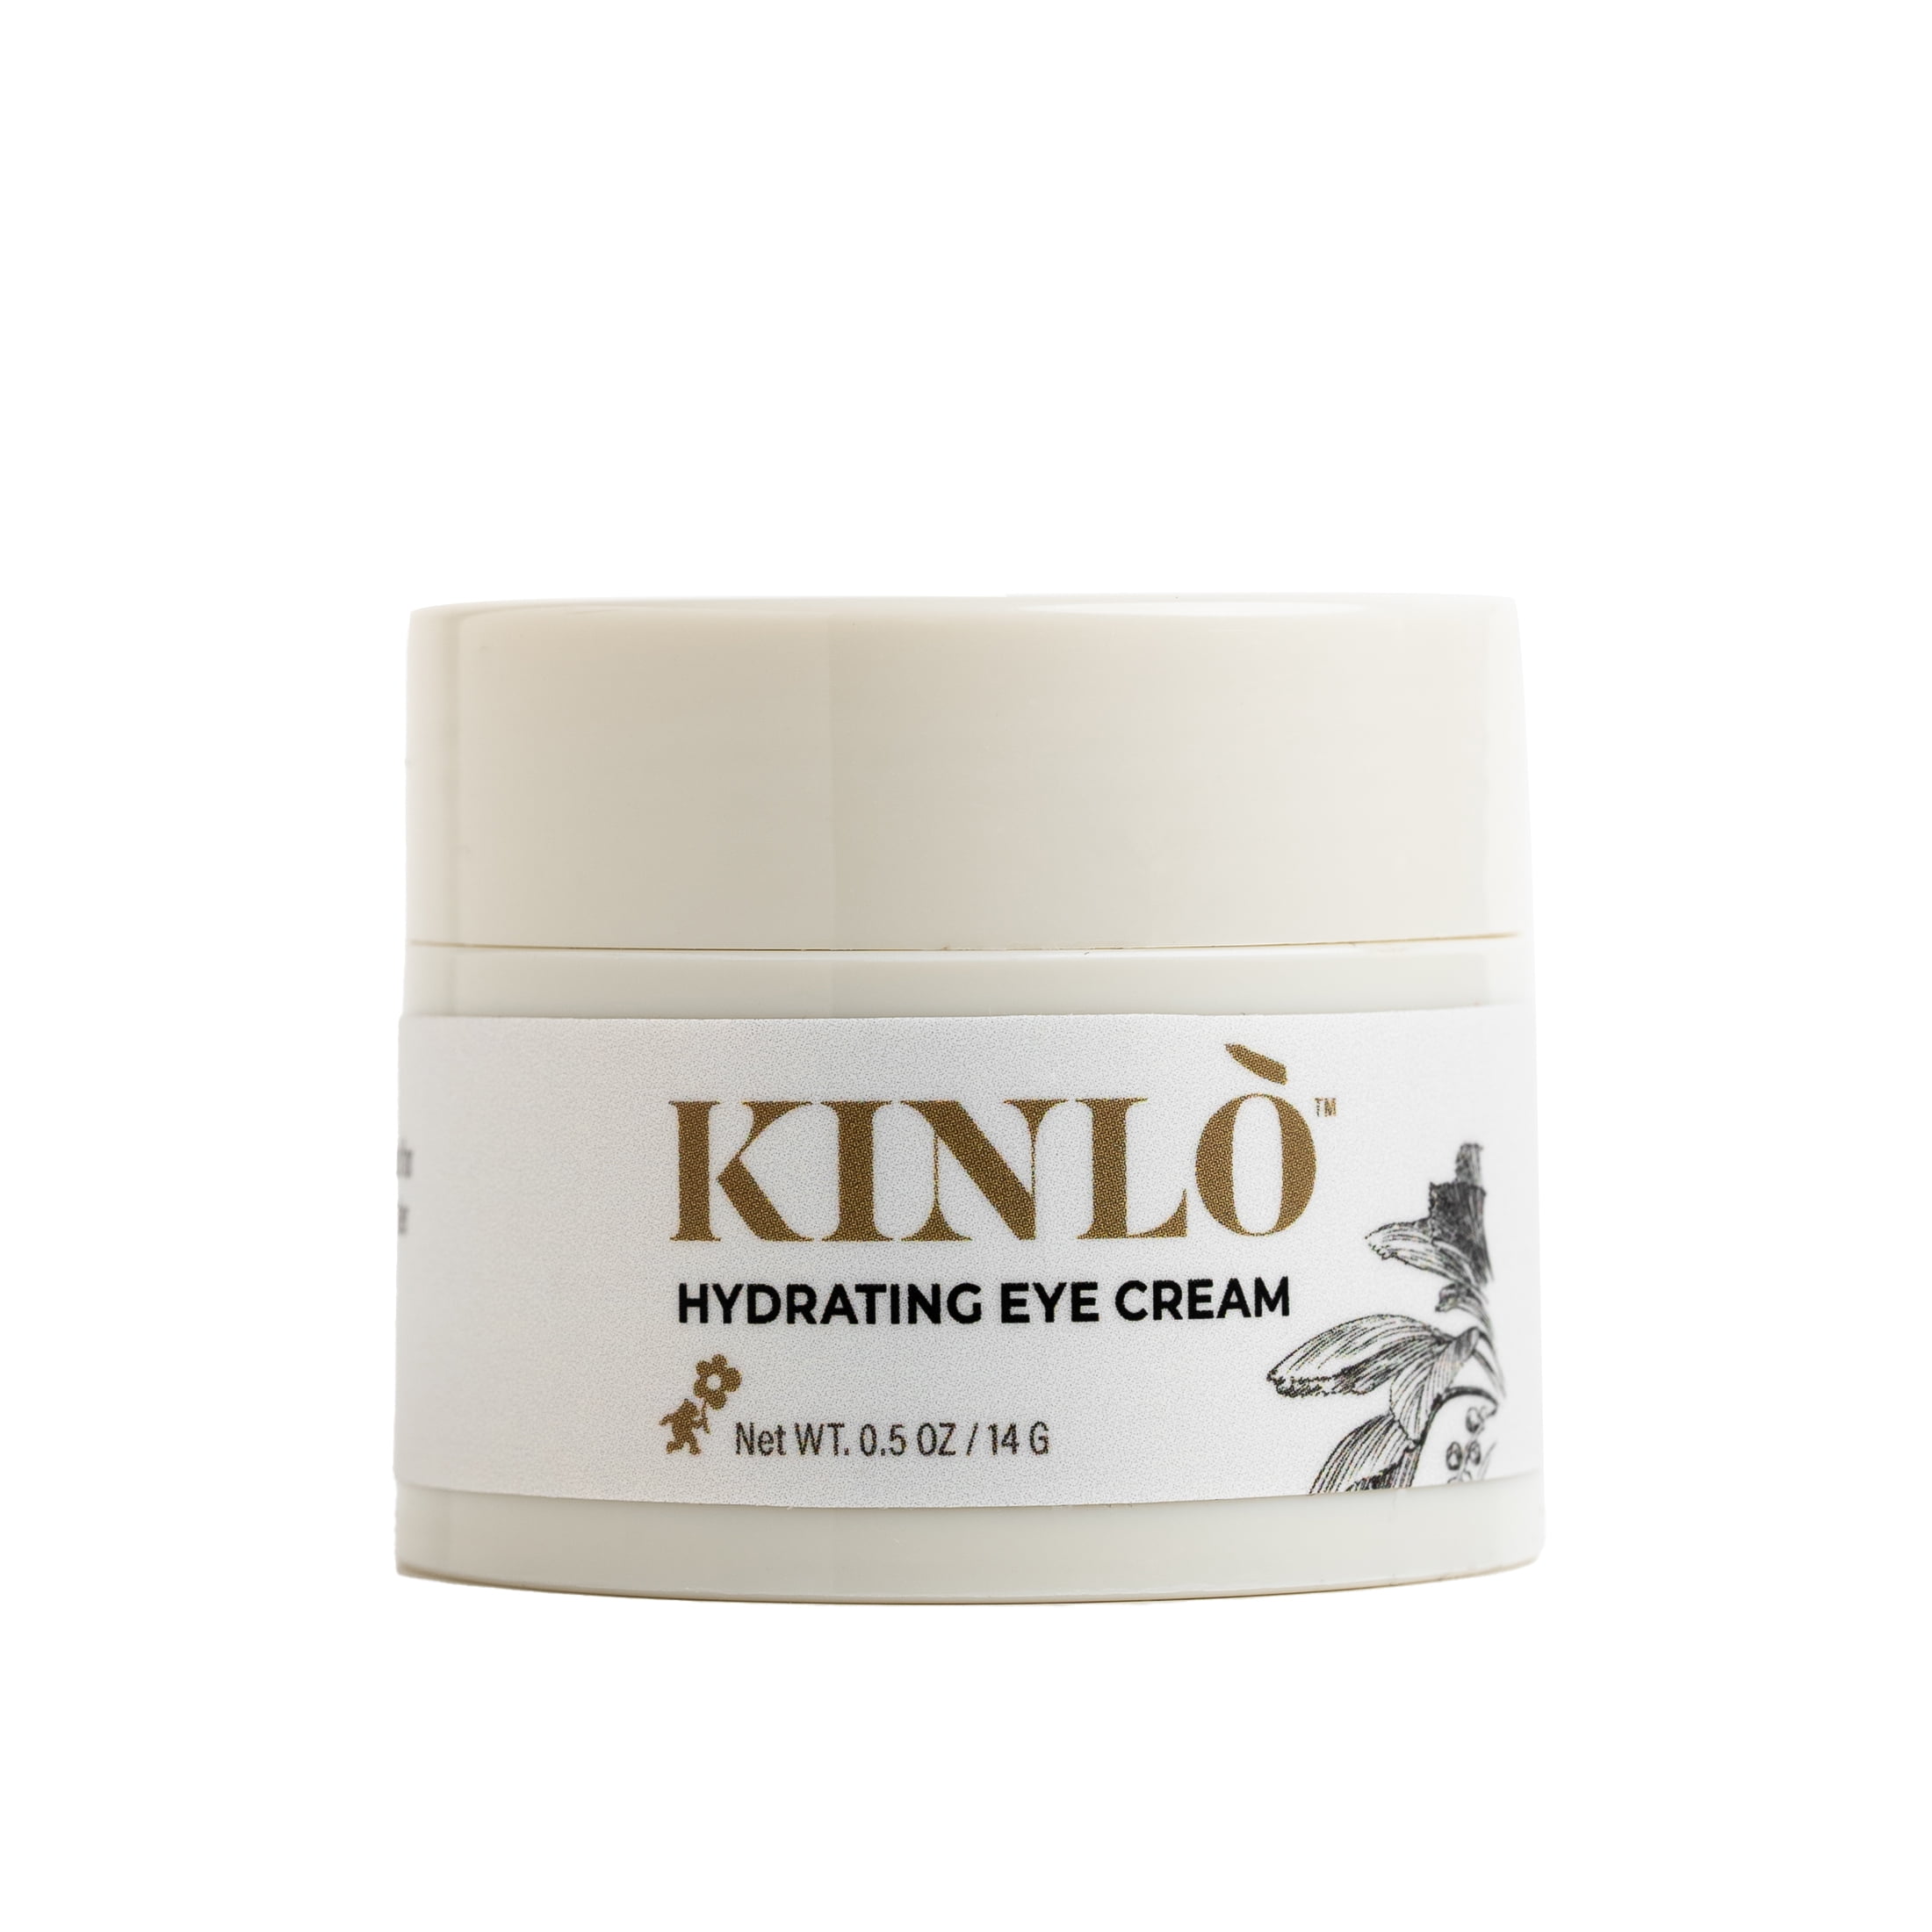 KINLO Hydrating Eye Cream with Aloe Vera and Jojoba Oil, 0.5oz